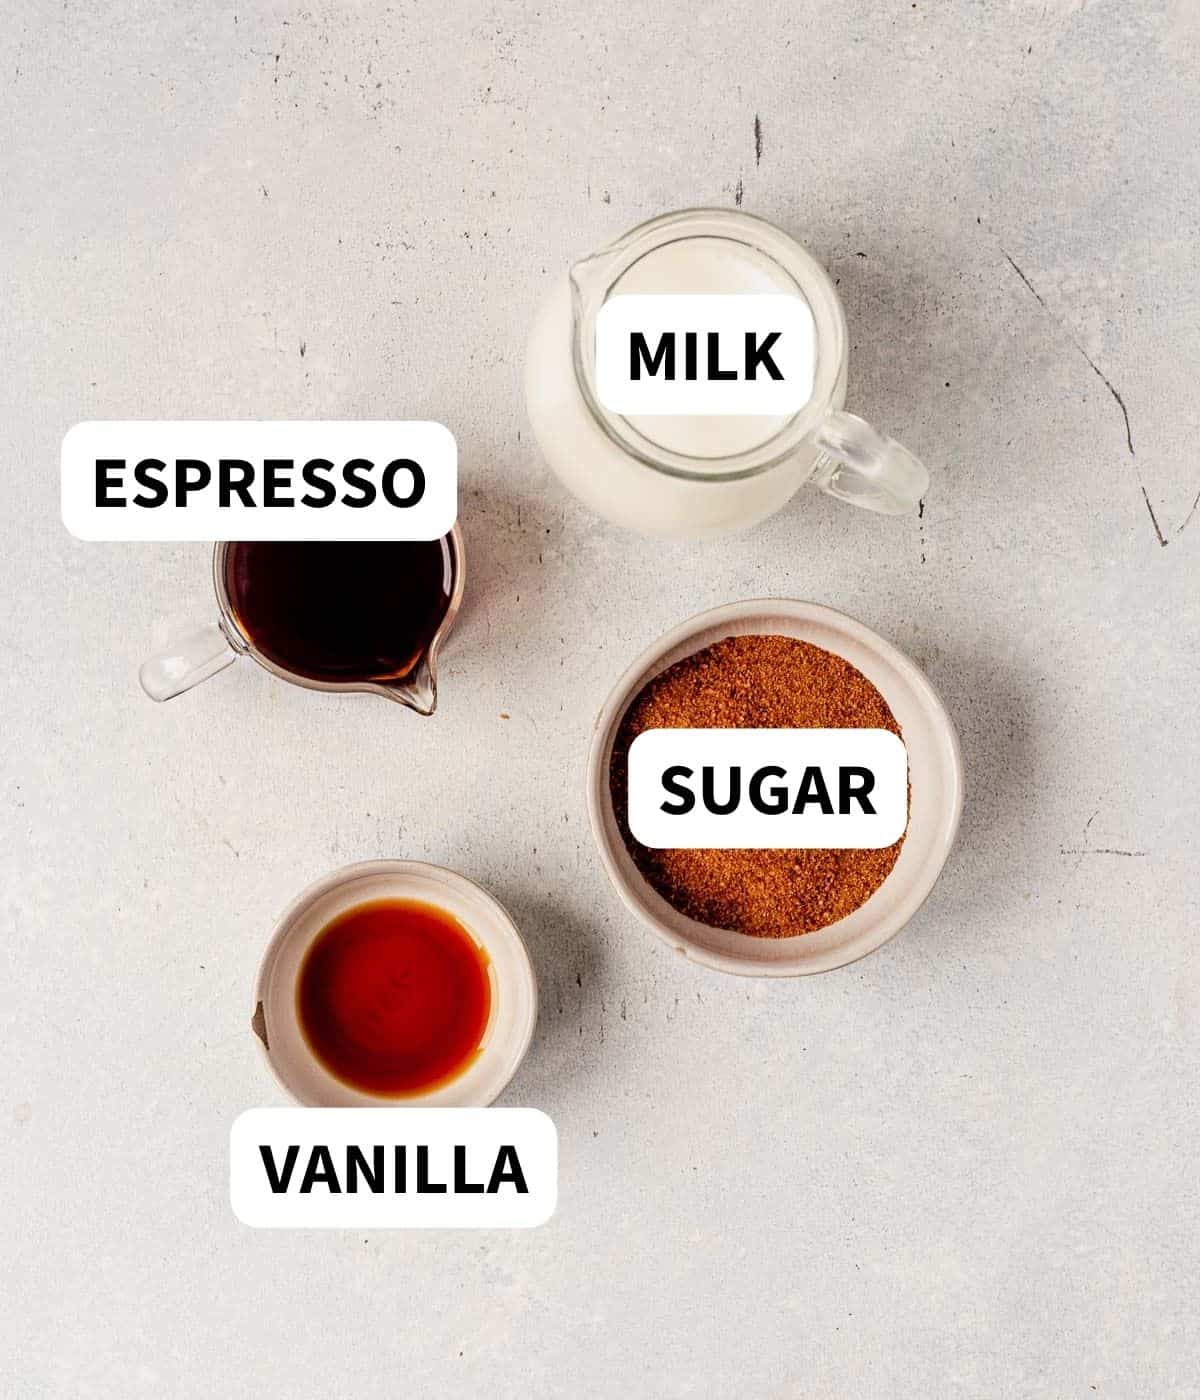 espresso, sugar, vanilla and milk on a countertop